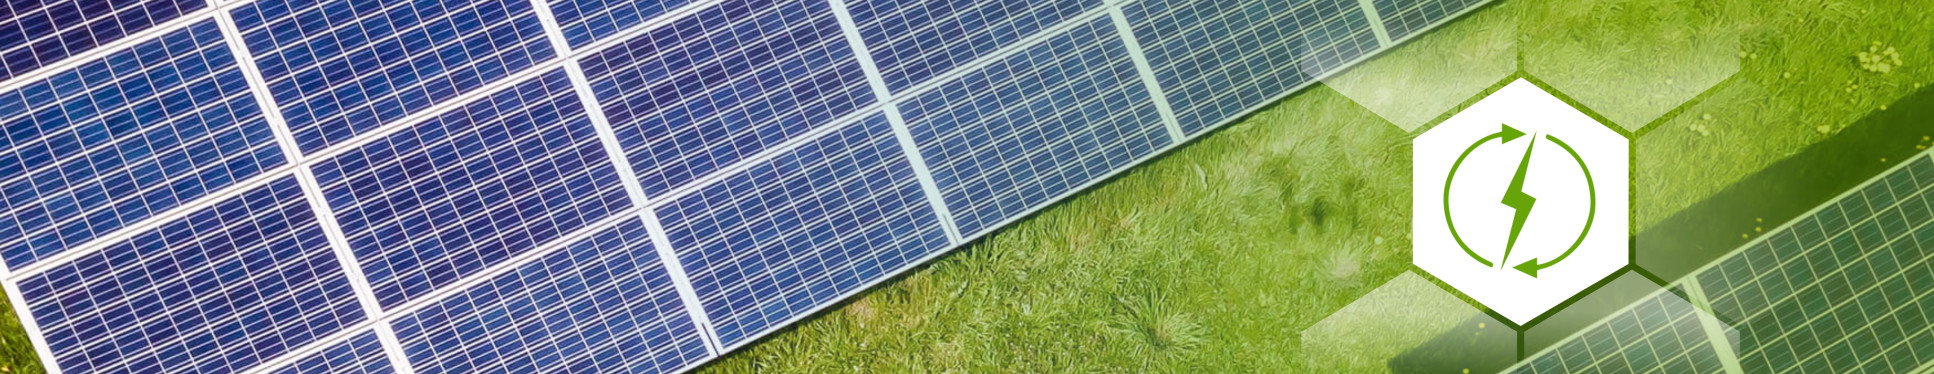 Solar panels on grass